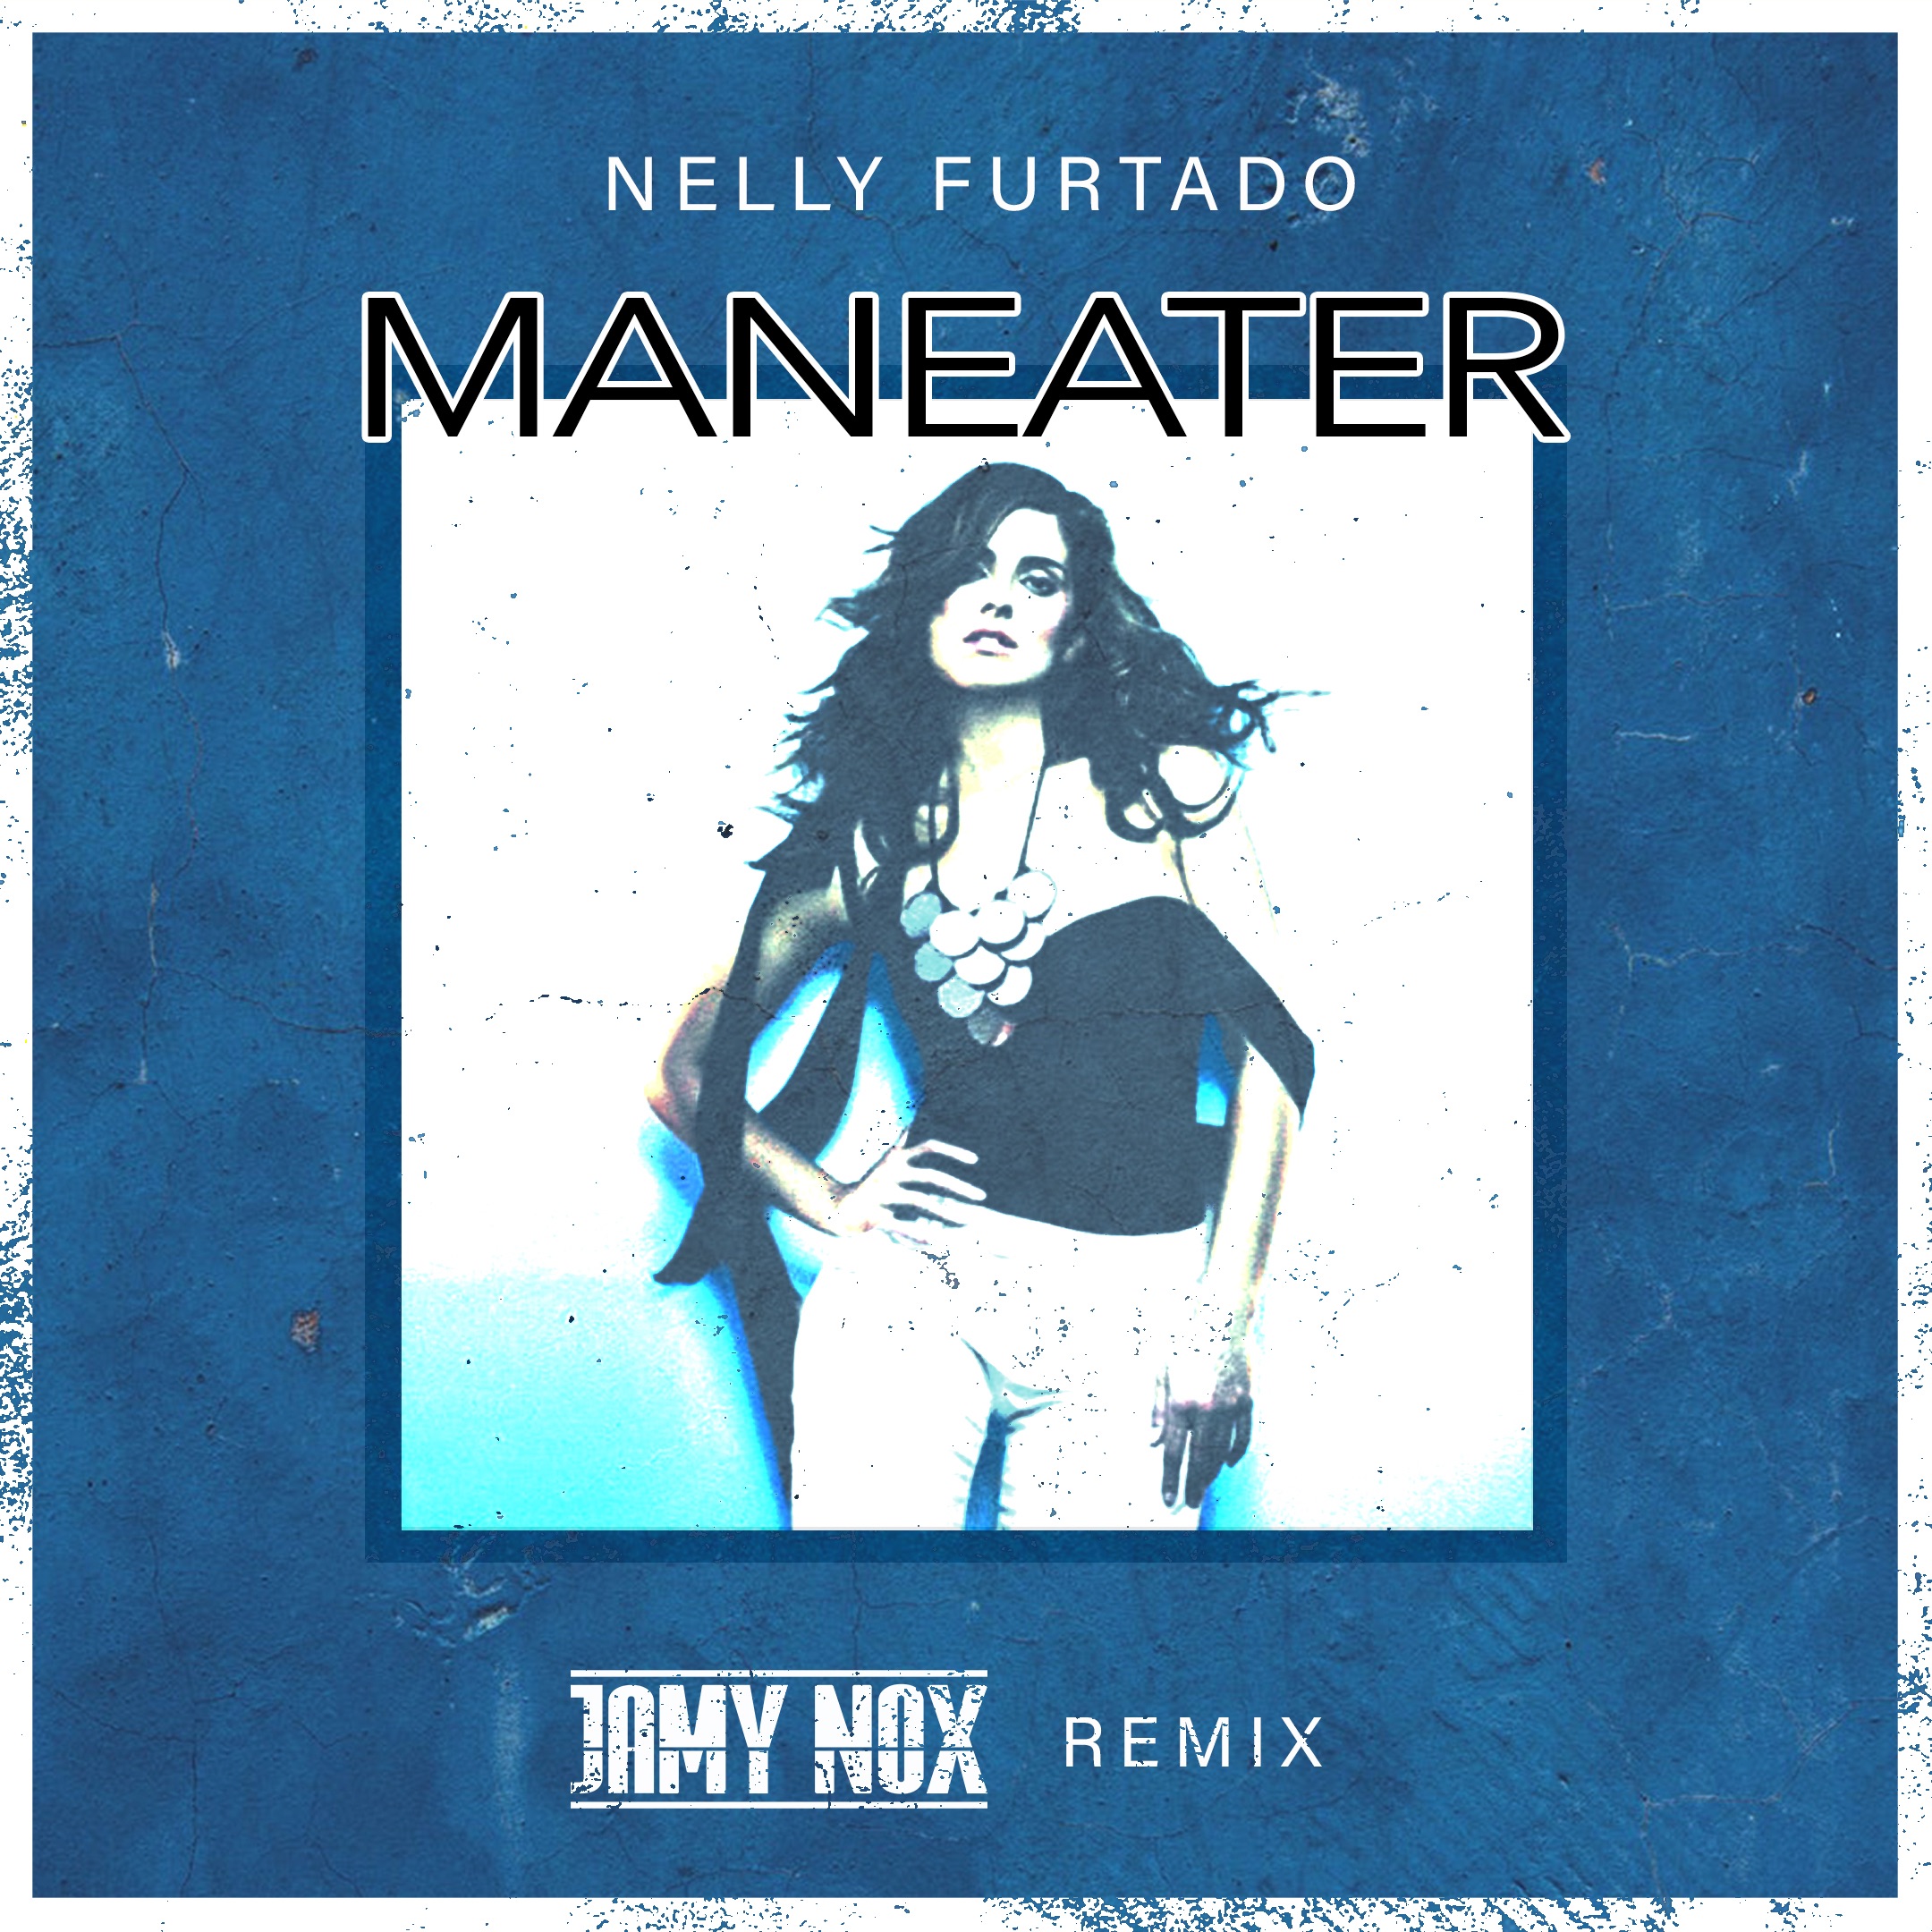 डाउनलोड करा Nelly Furtado - Maneater (Jamy Nox Remix)